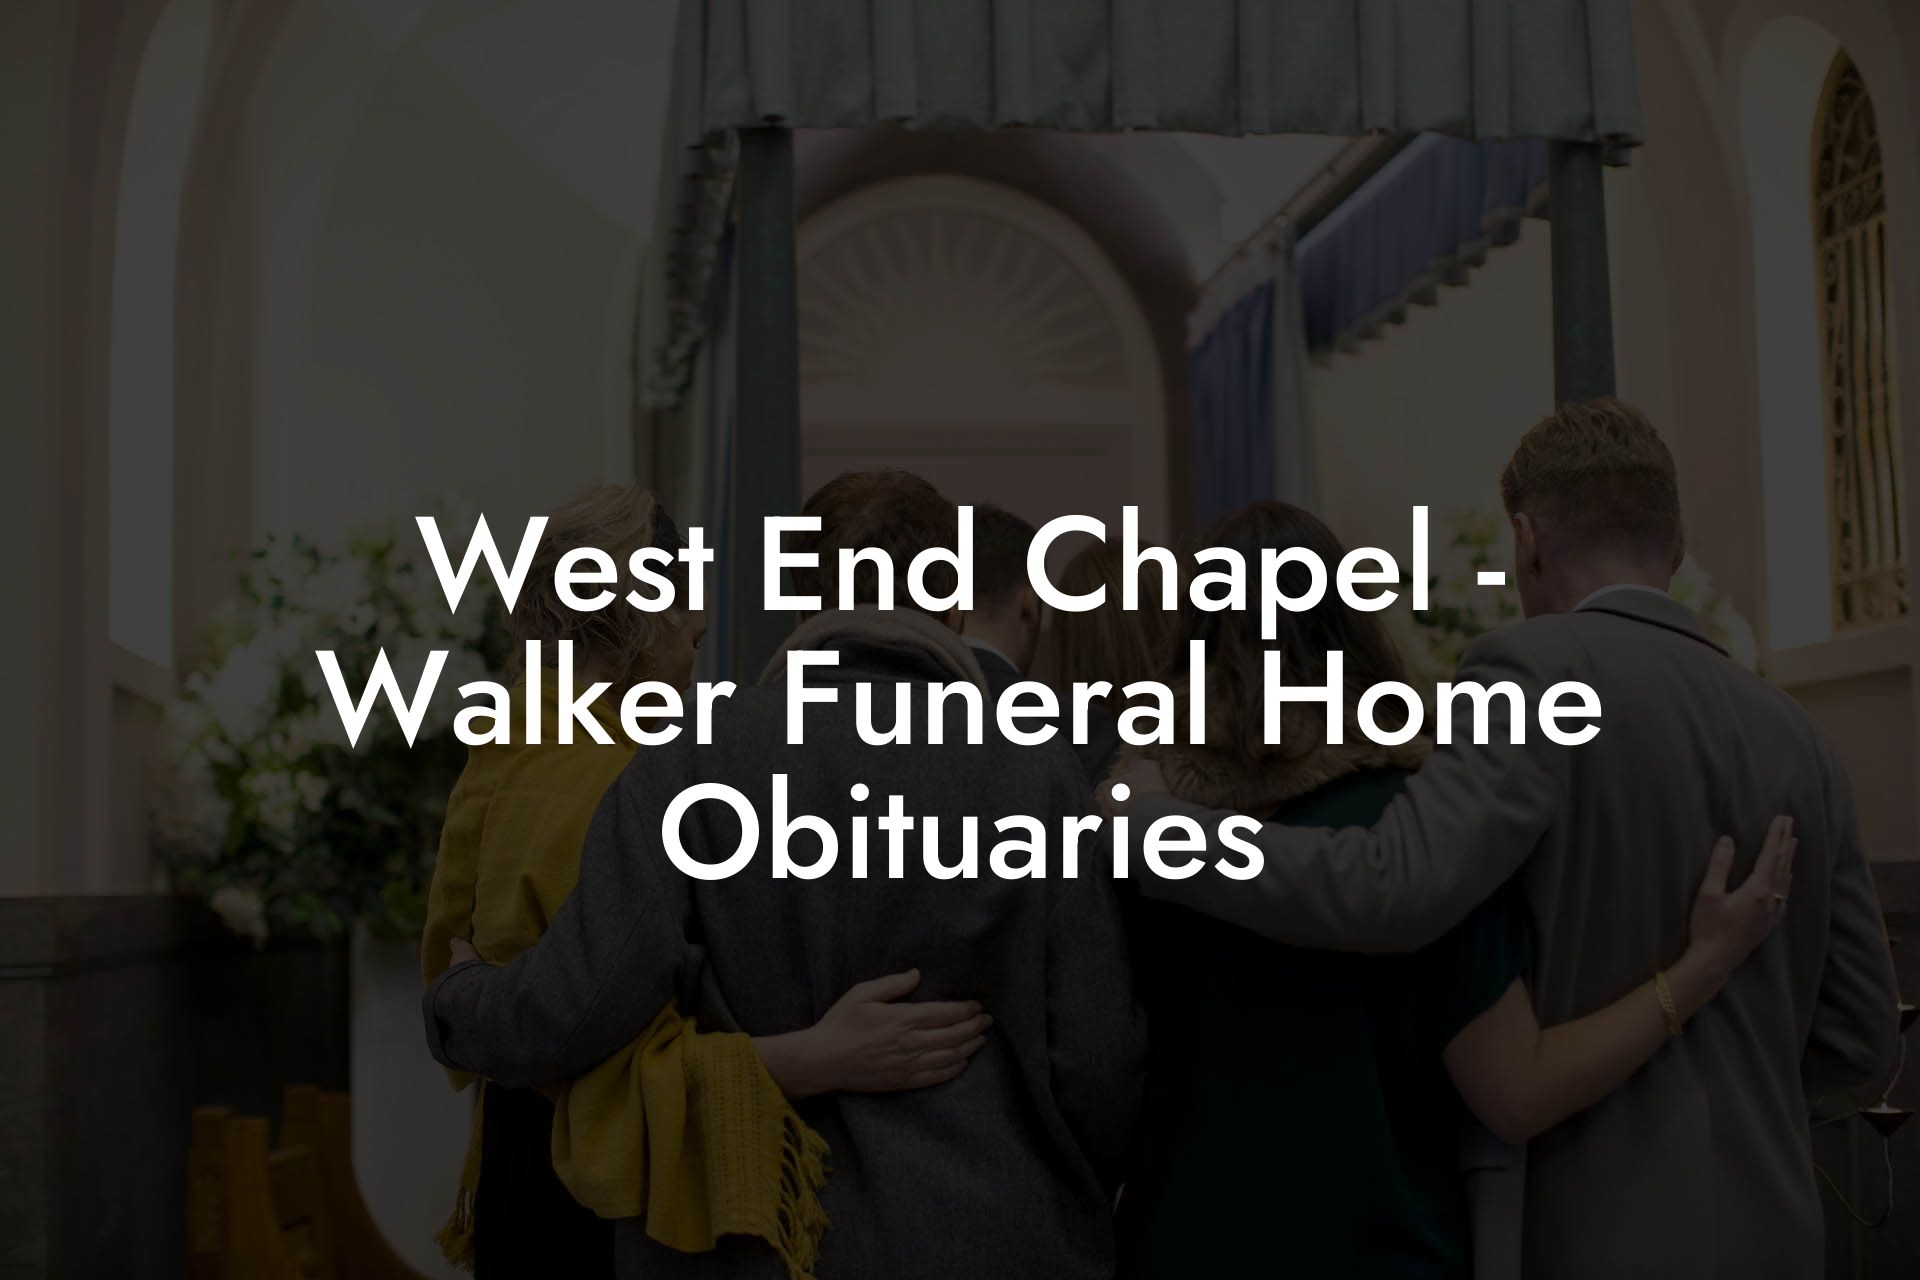 West End Chapel - Walker Funeral Home Obituaries